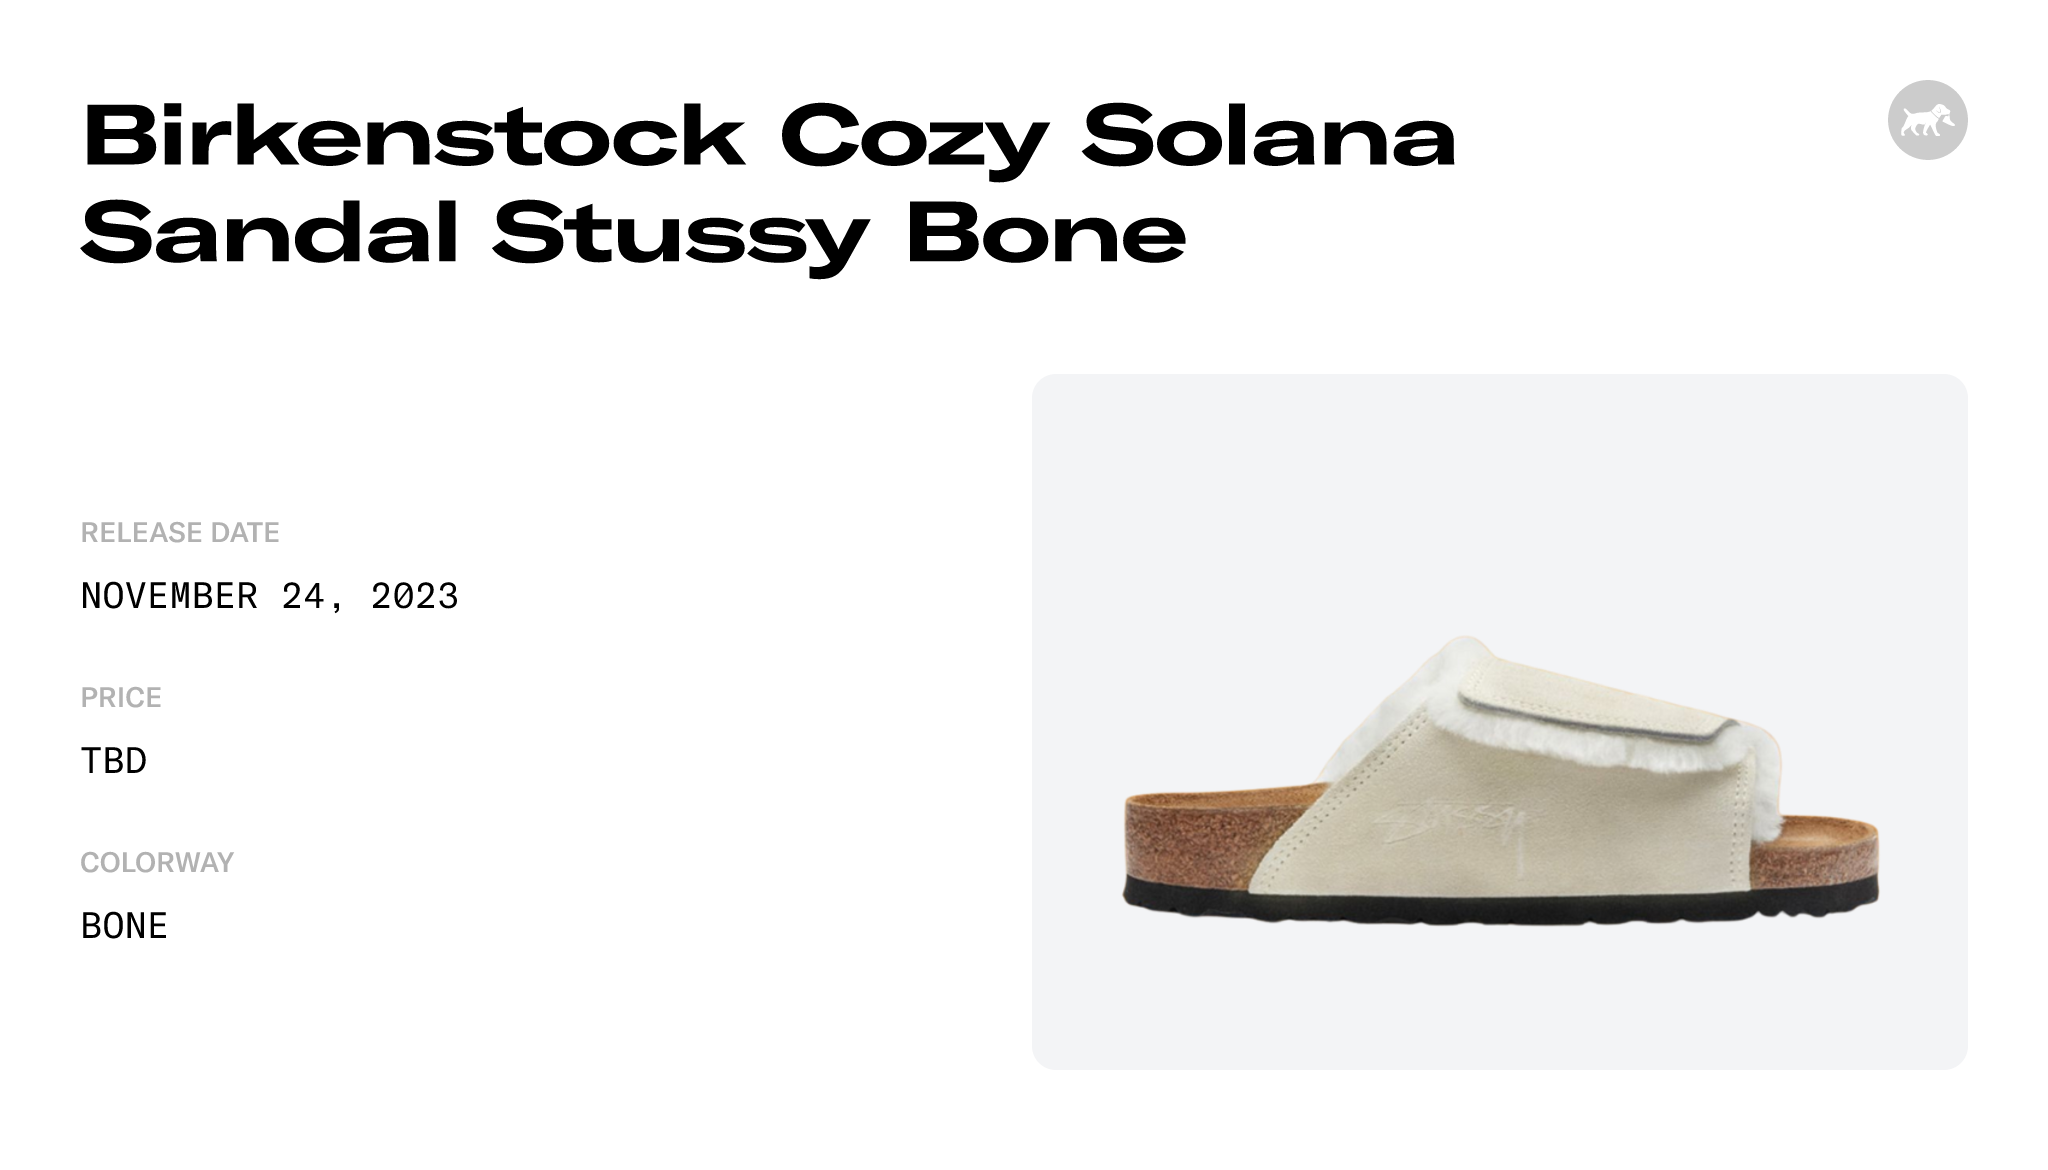 Birkenstock Cozy Solana Sandal Stussy Bonefalse Raffles and